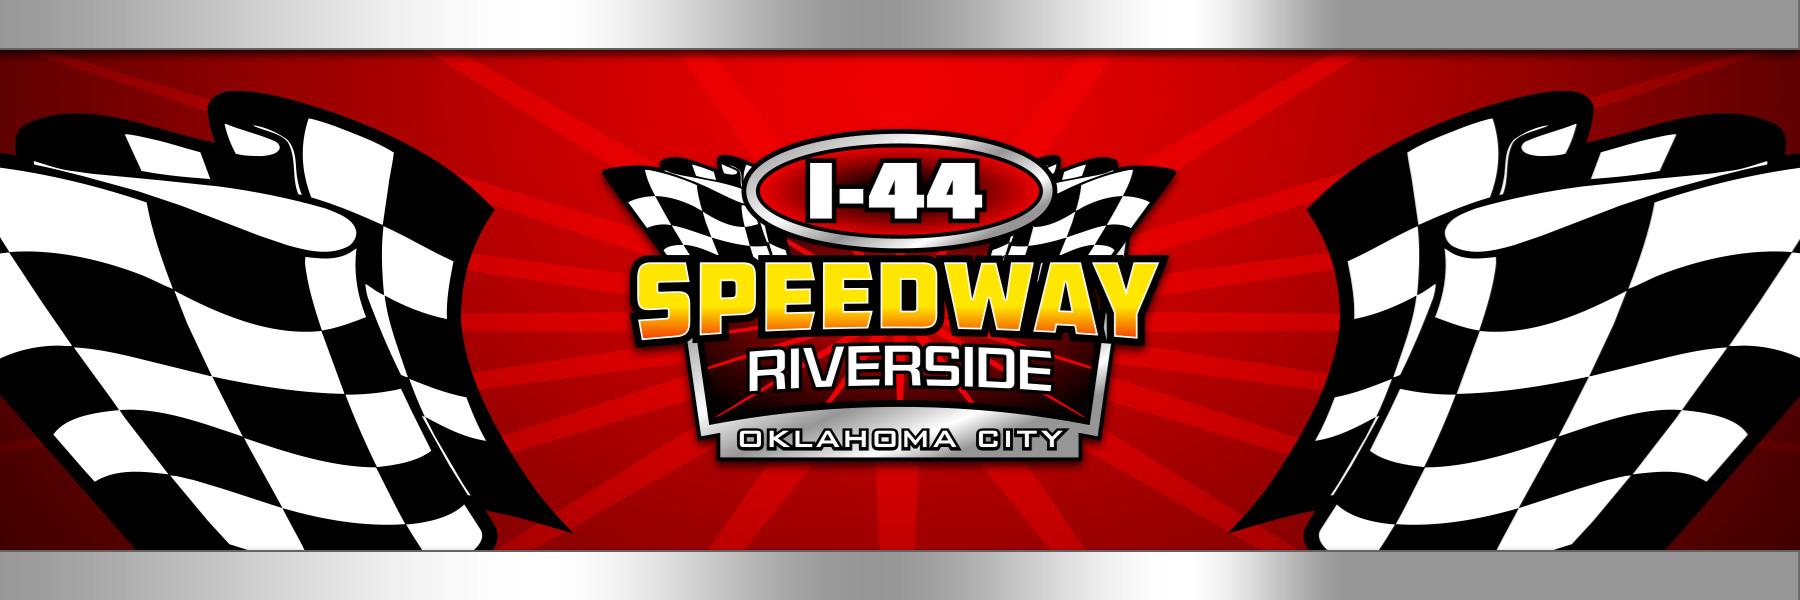 6/11/2022 - I-44 Riverside Speedway